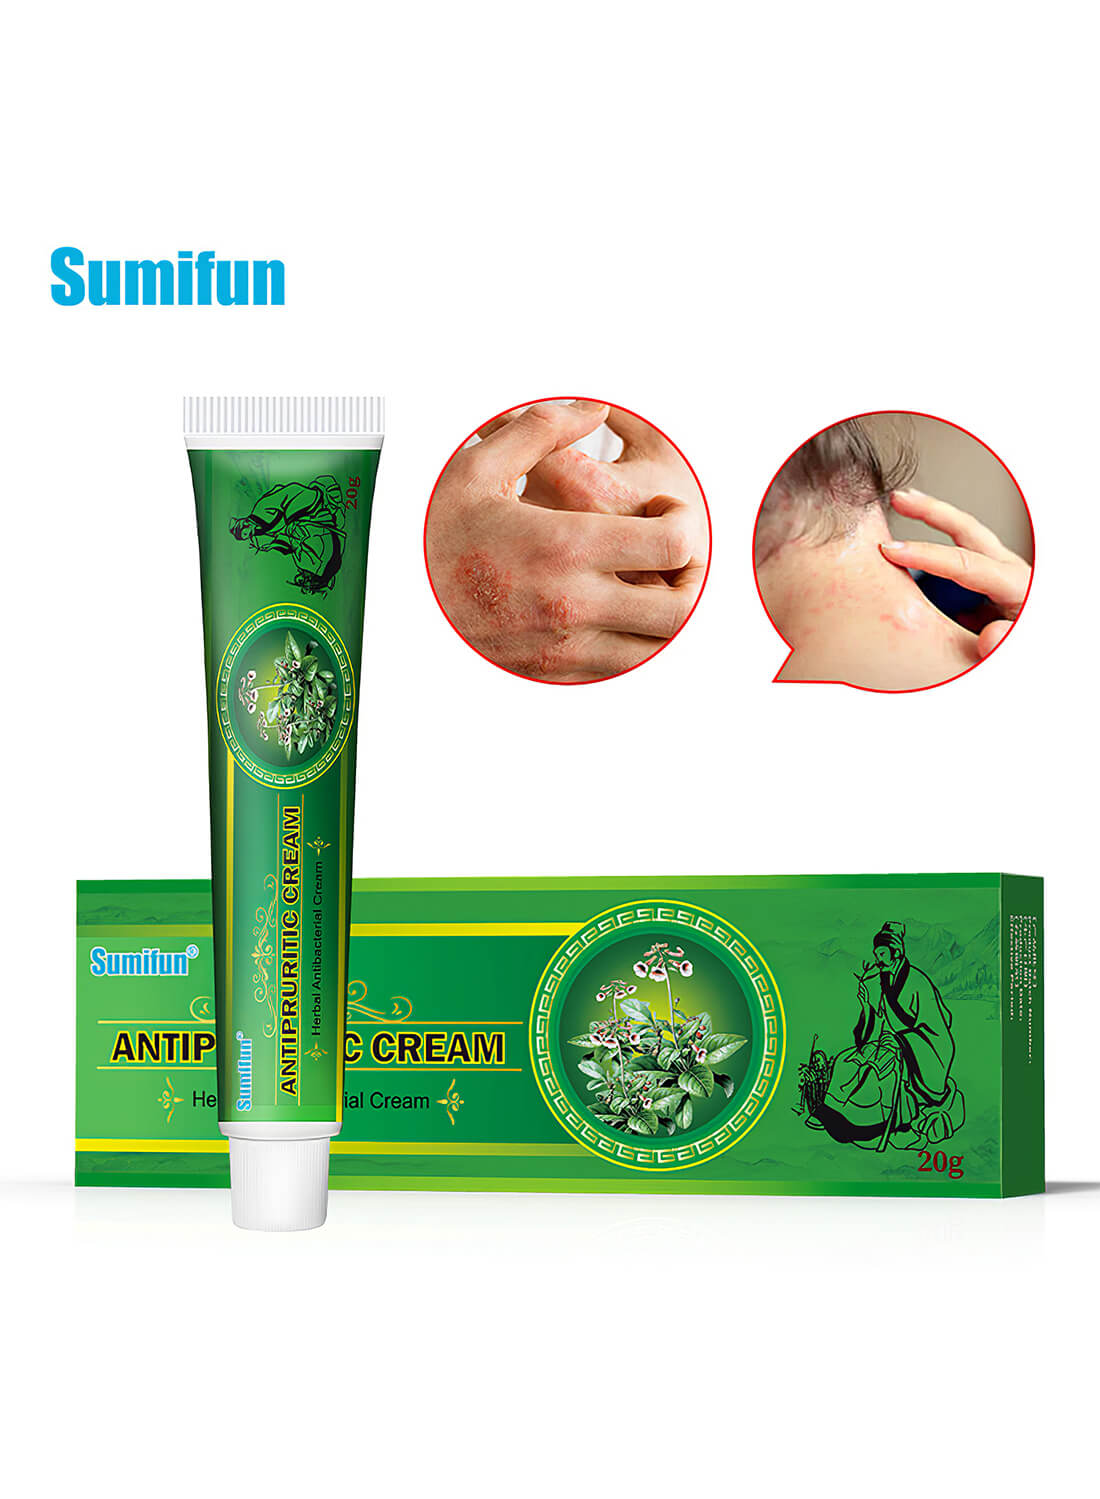 Sumifun Antibacterial Cream 20g